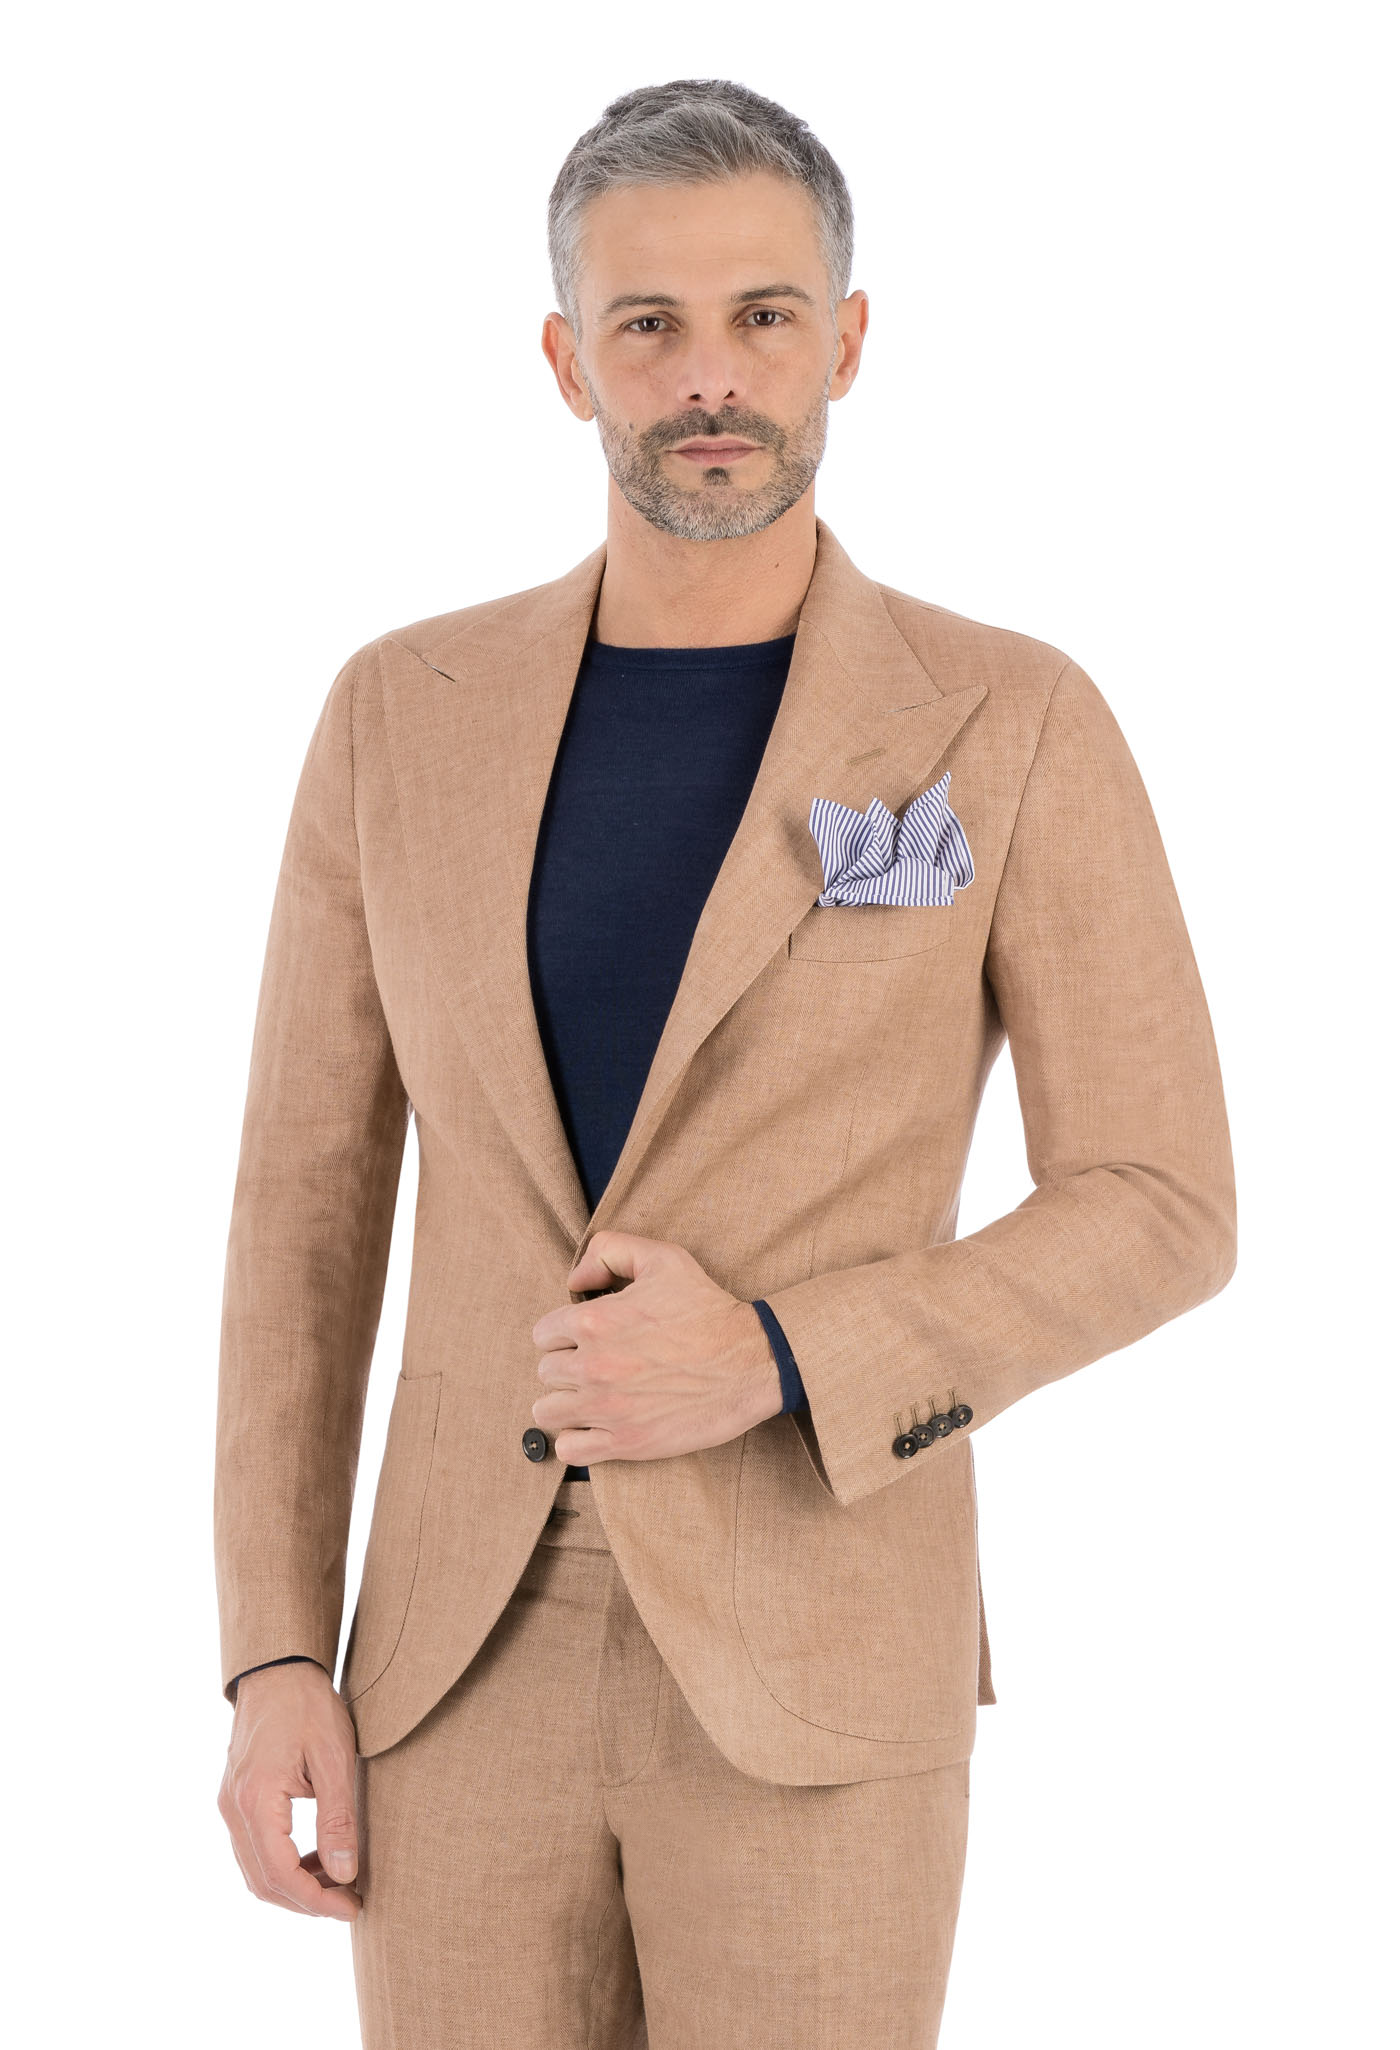 Porto Ercole Caramel Suit